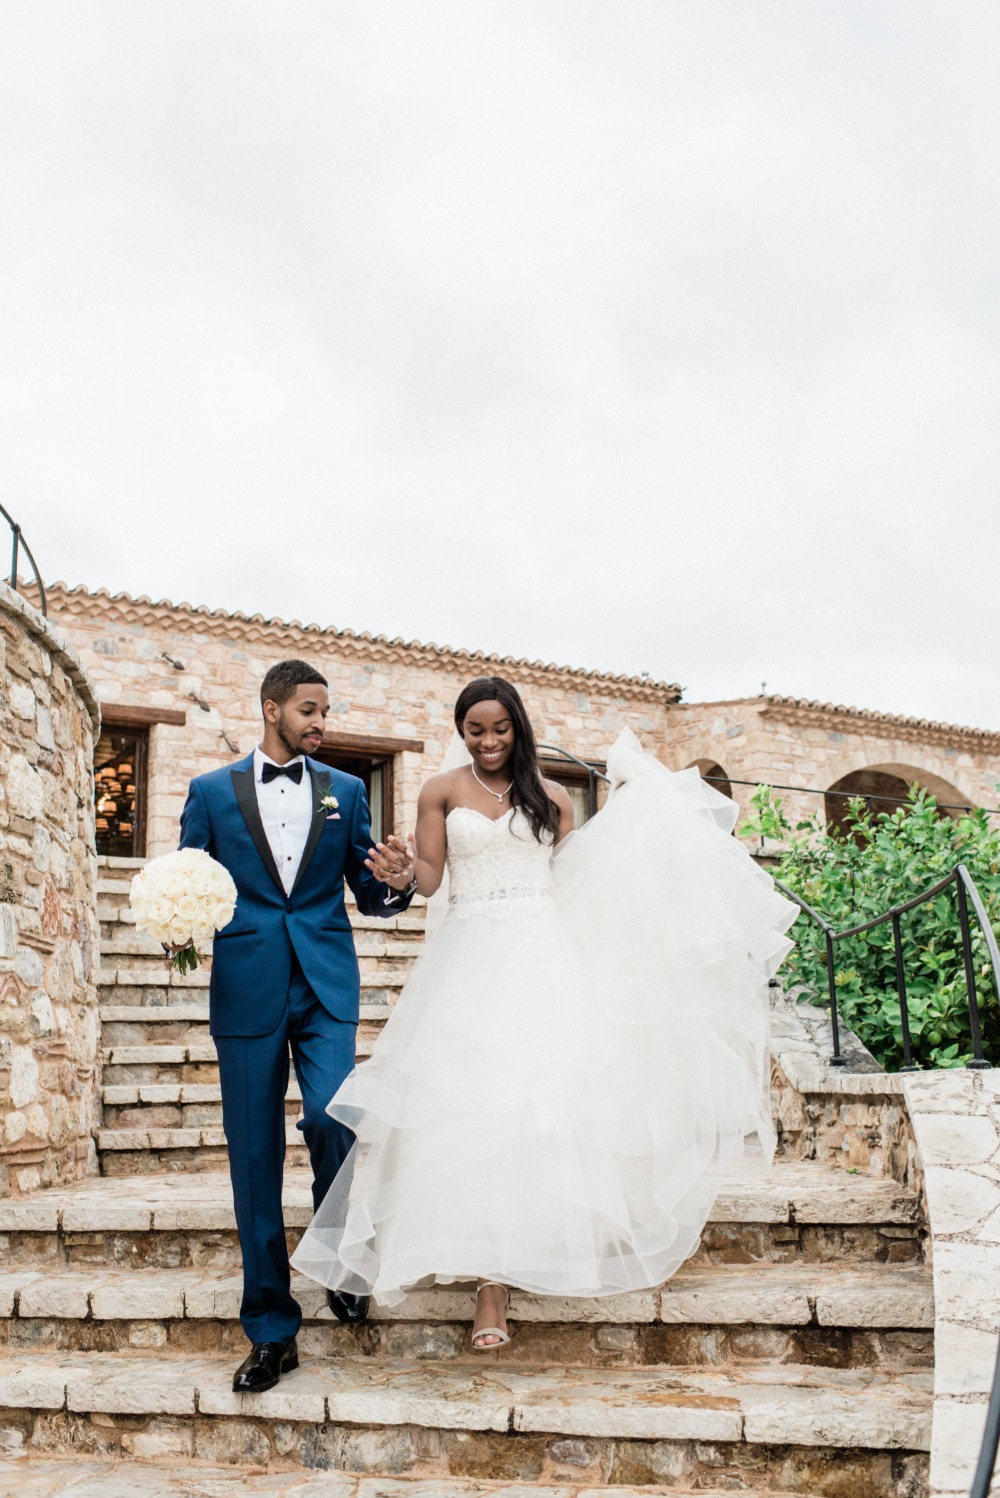 Brenae and Ryan’s Romantic Destination Wedding in Greece gallery image 14